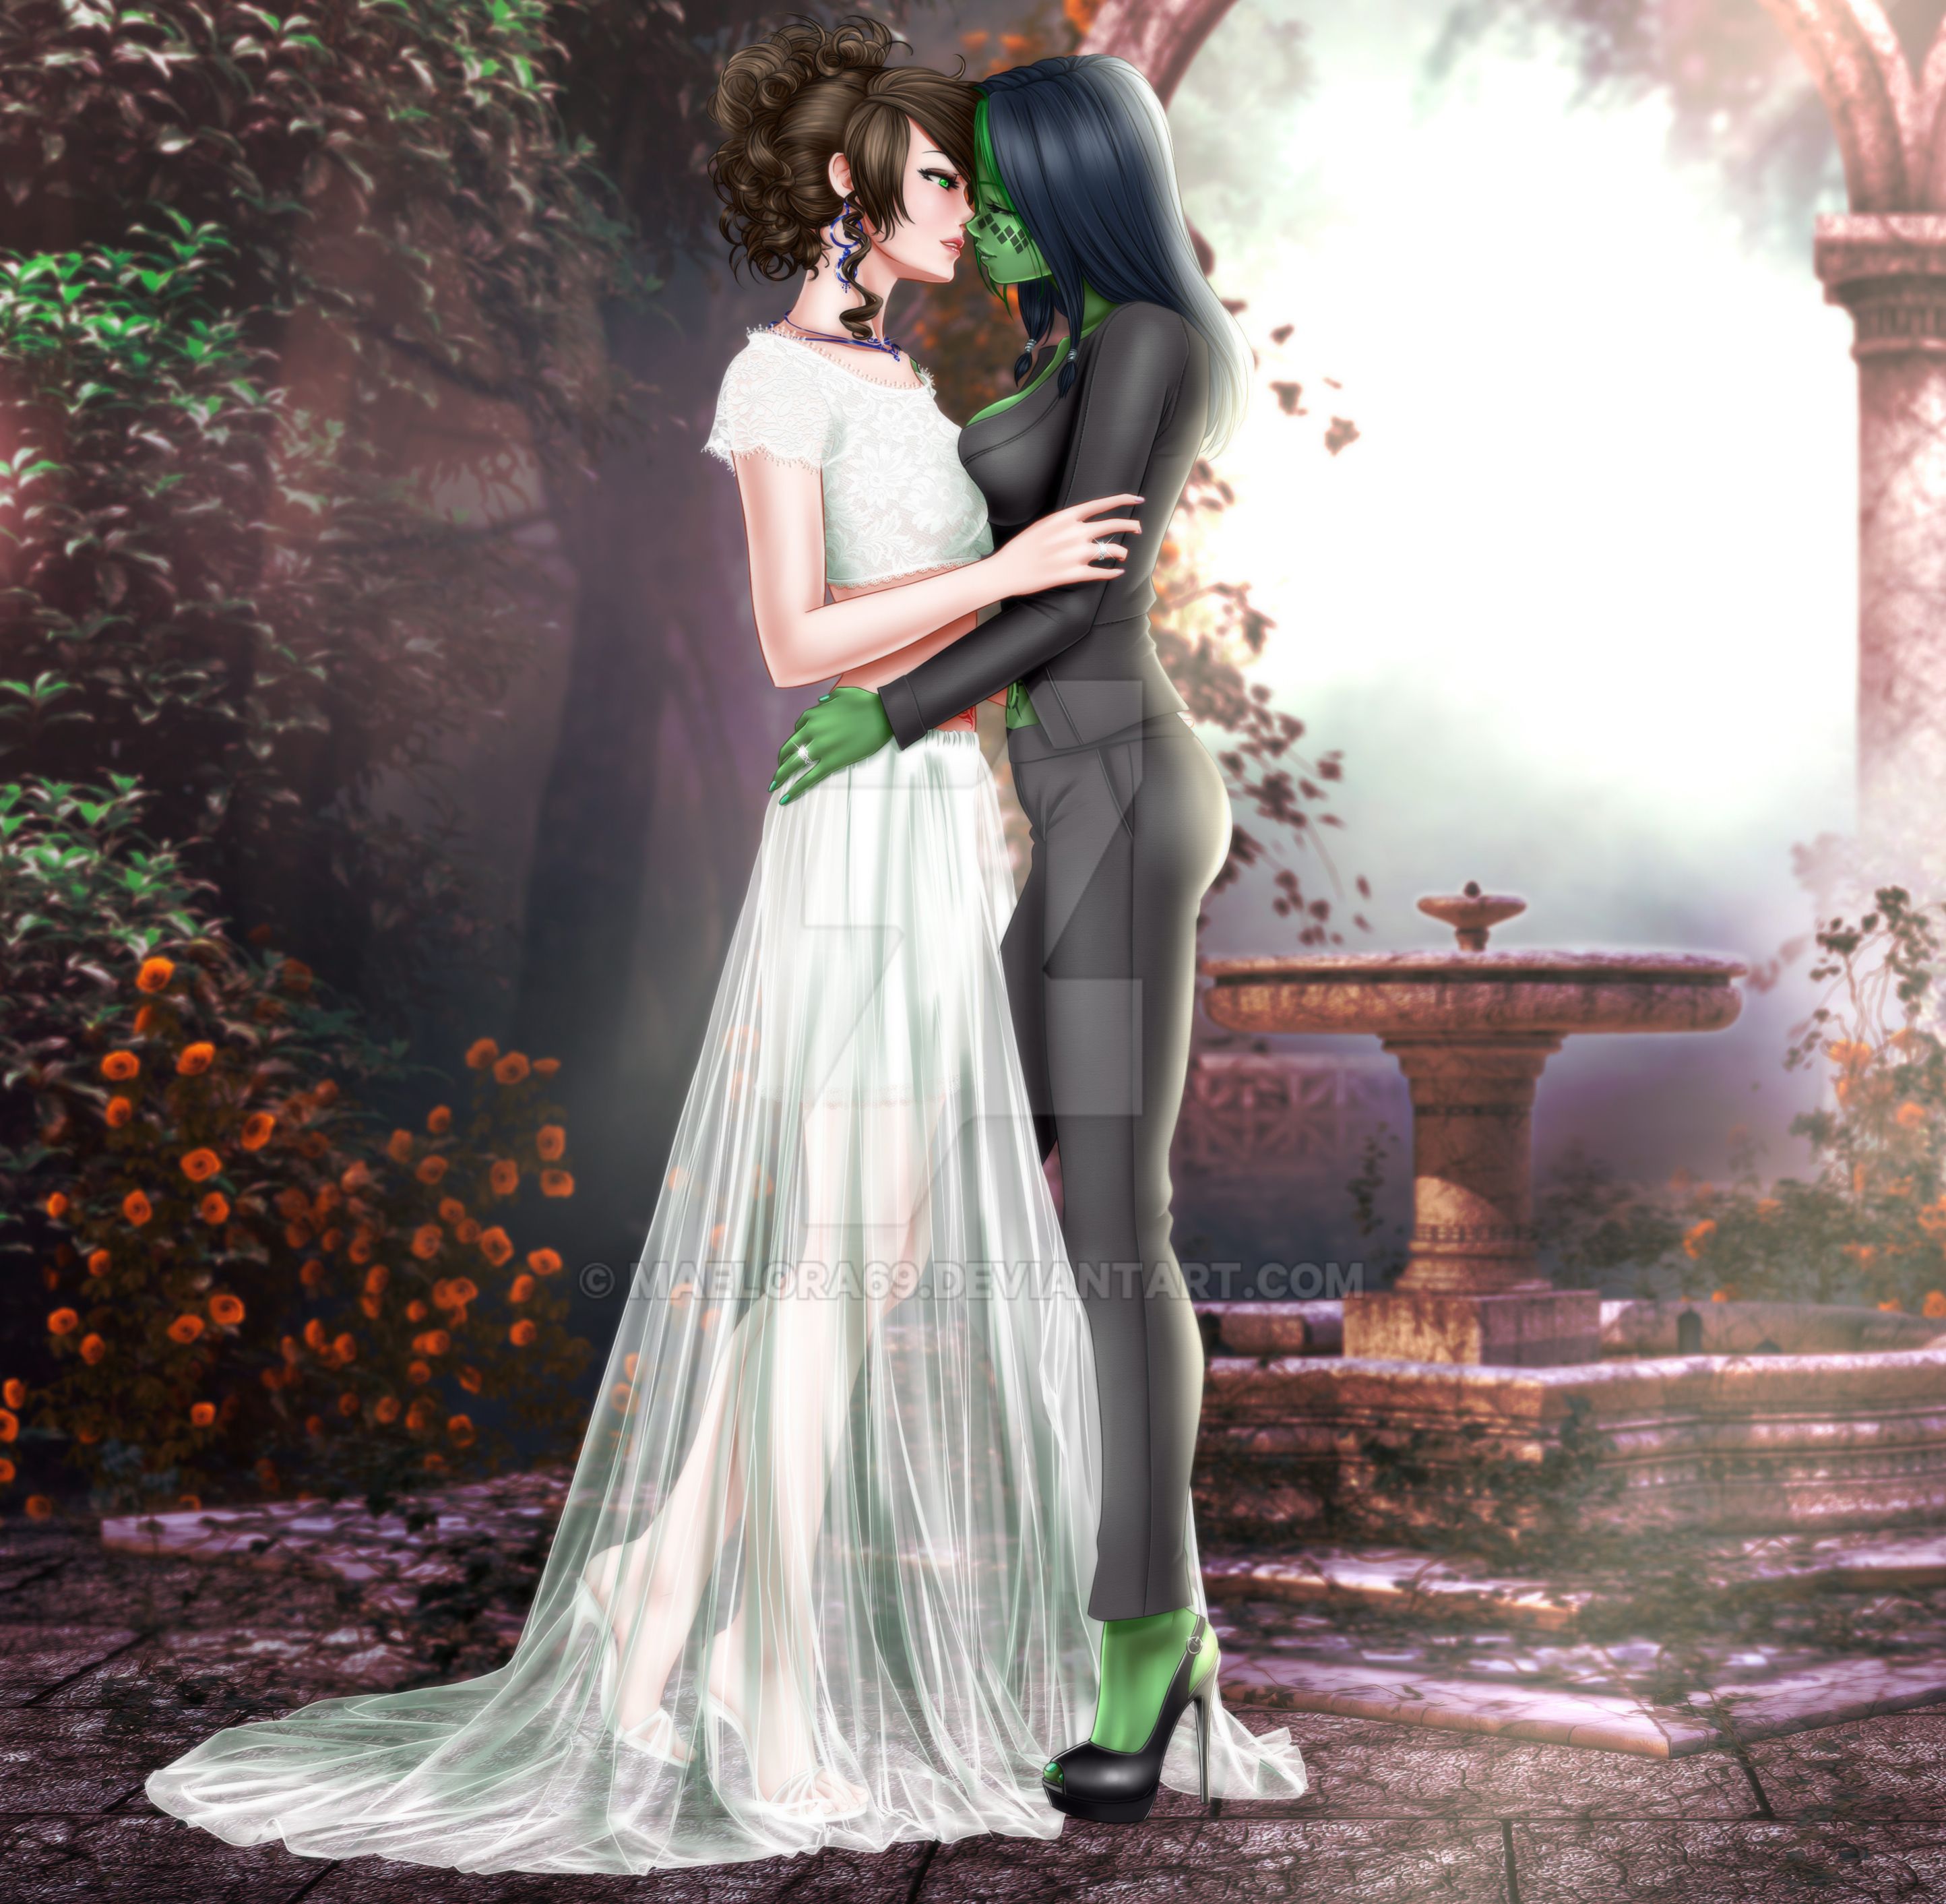 kiss_the_bride_by_maelora69-da3mvrj.jpg